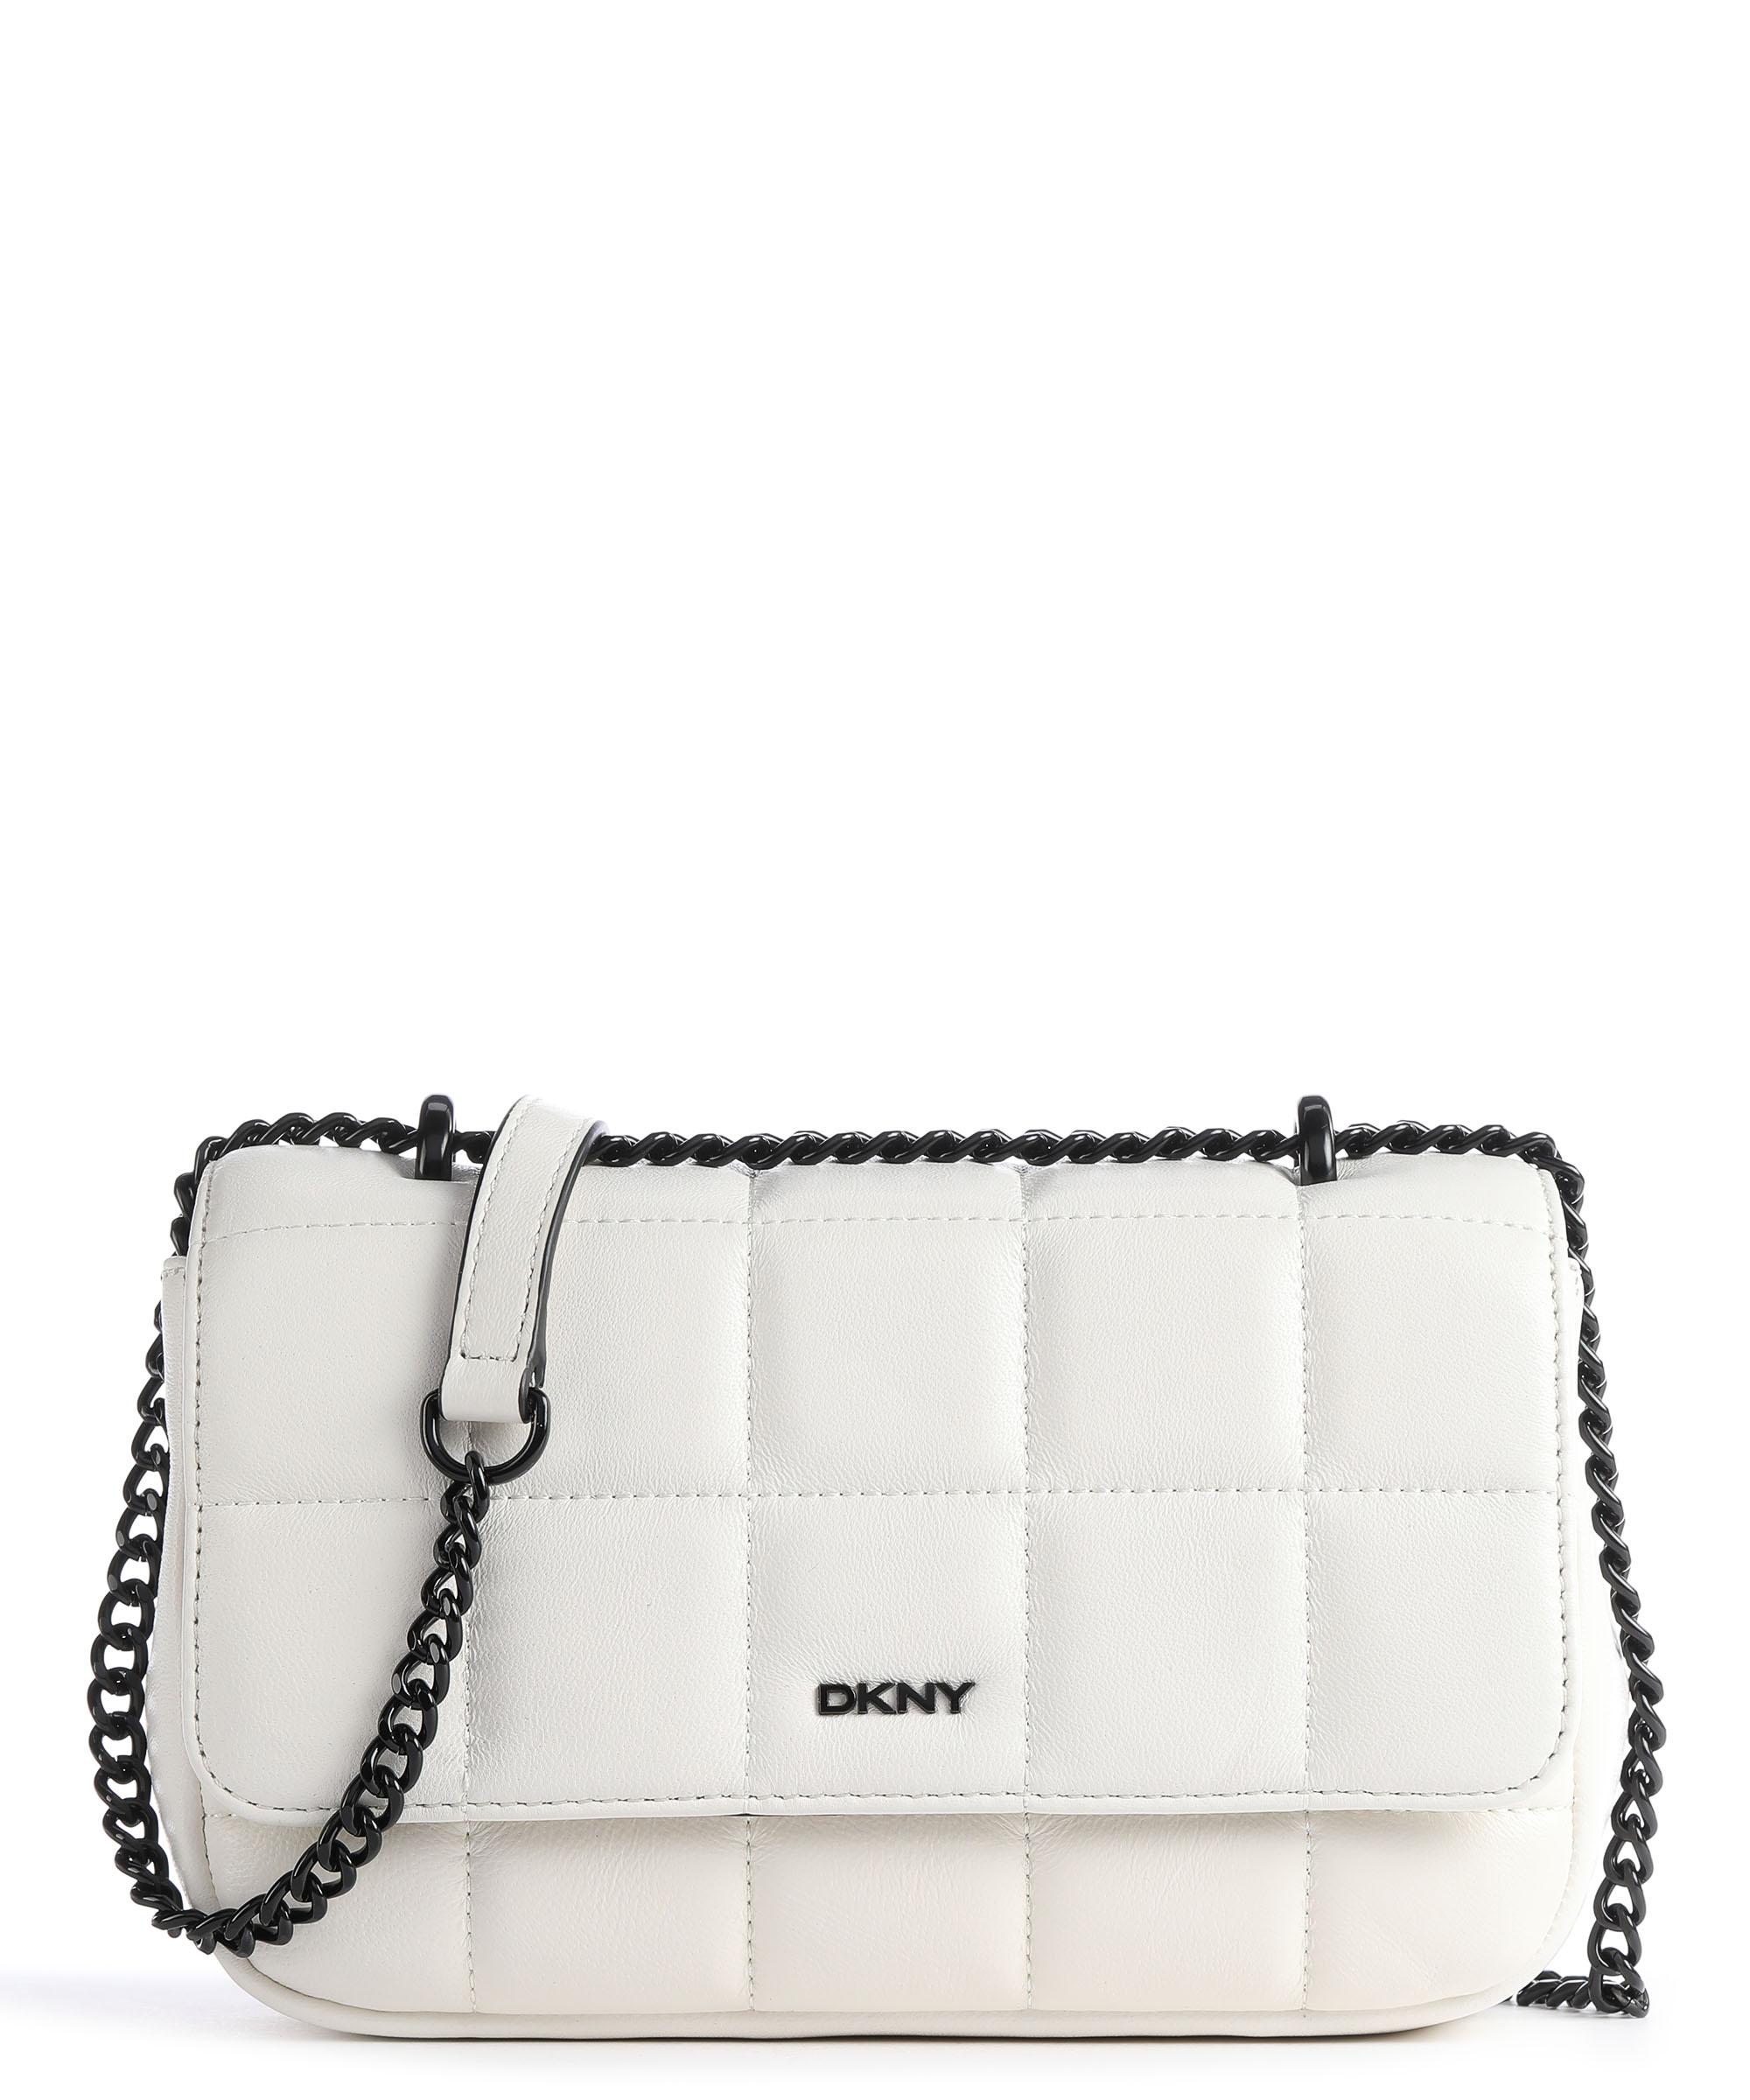 NEW! DONNA KARAN NEW YORK DKNY BRYANT PARK DOUBLE ZIP CROSSBODY SLING BAG  $158 | eBay